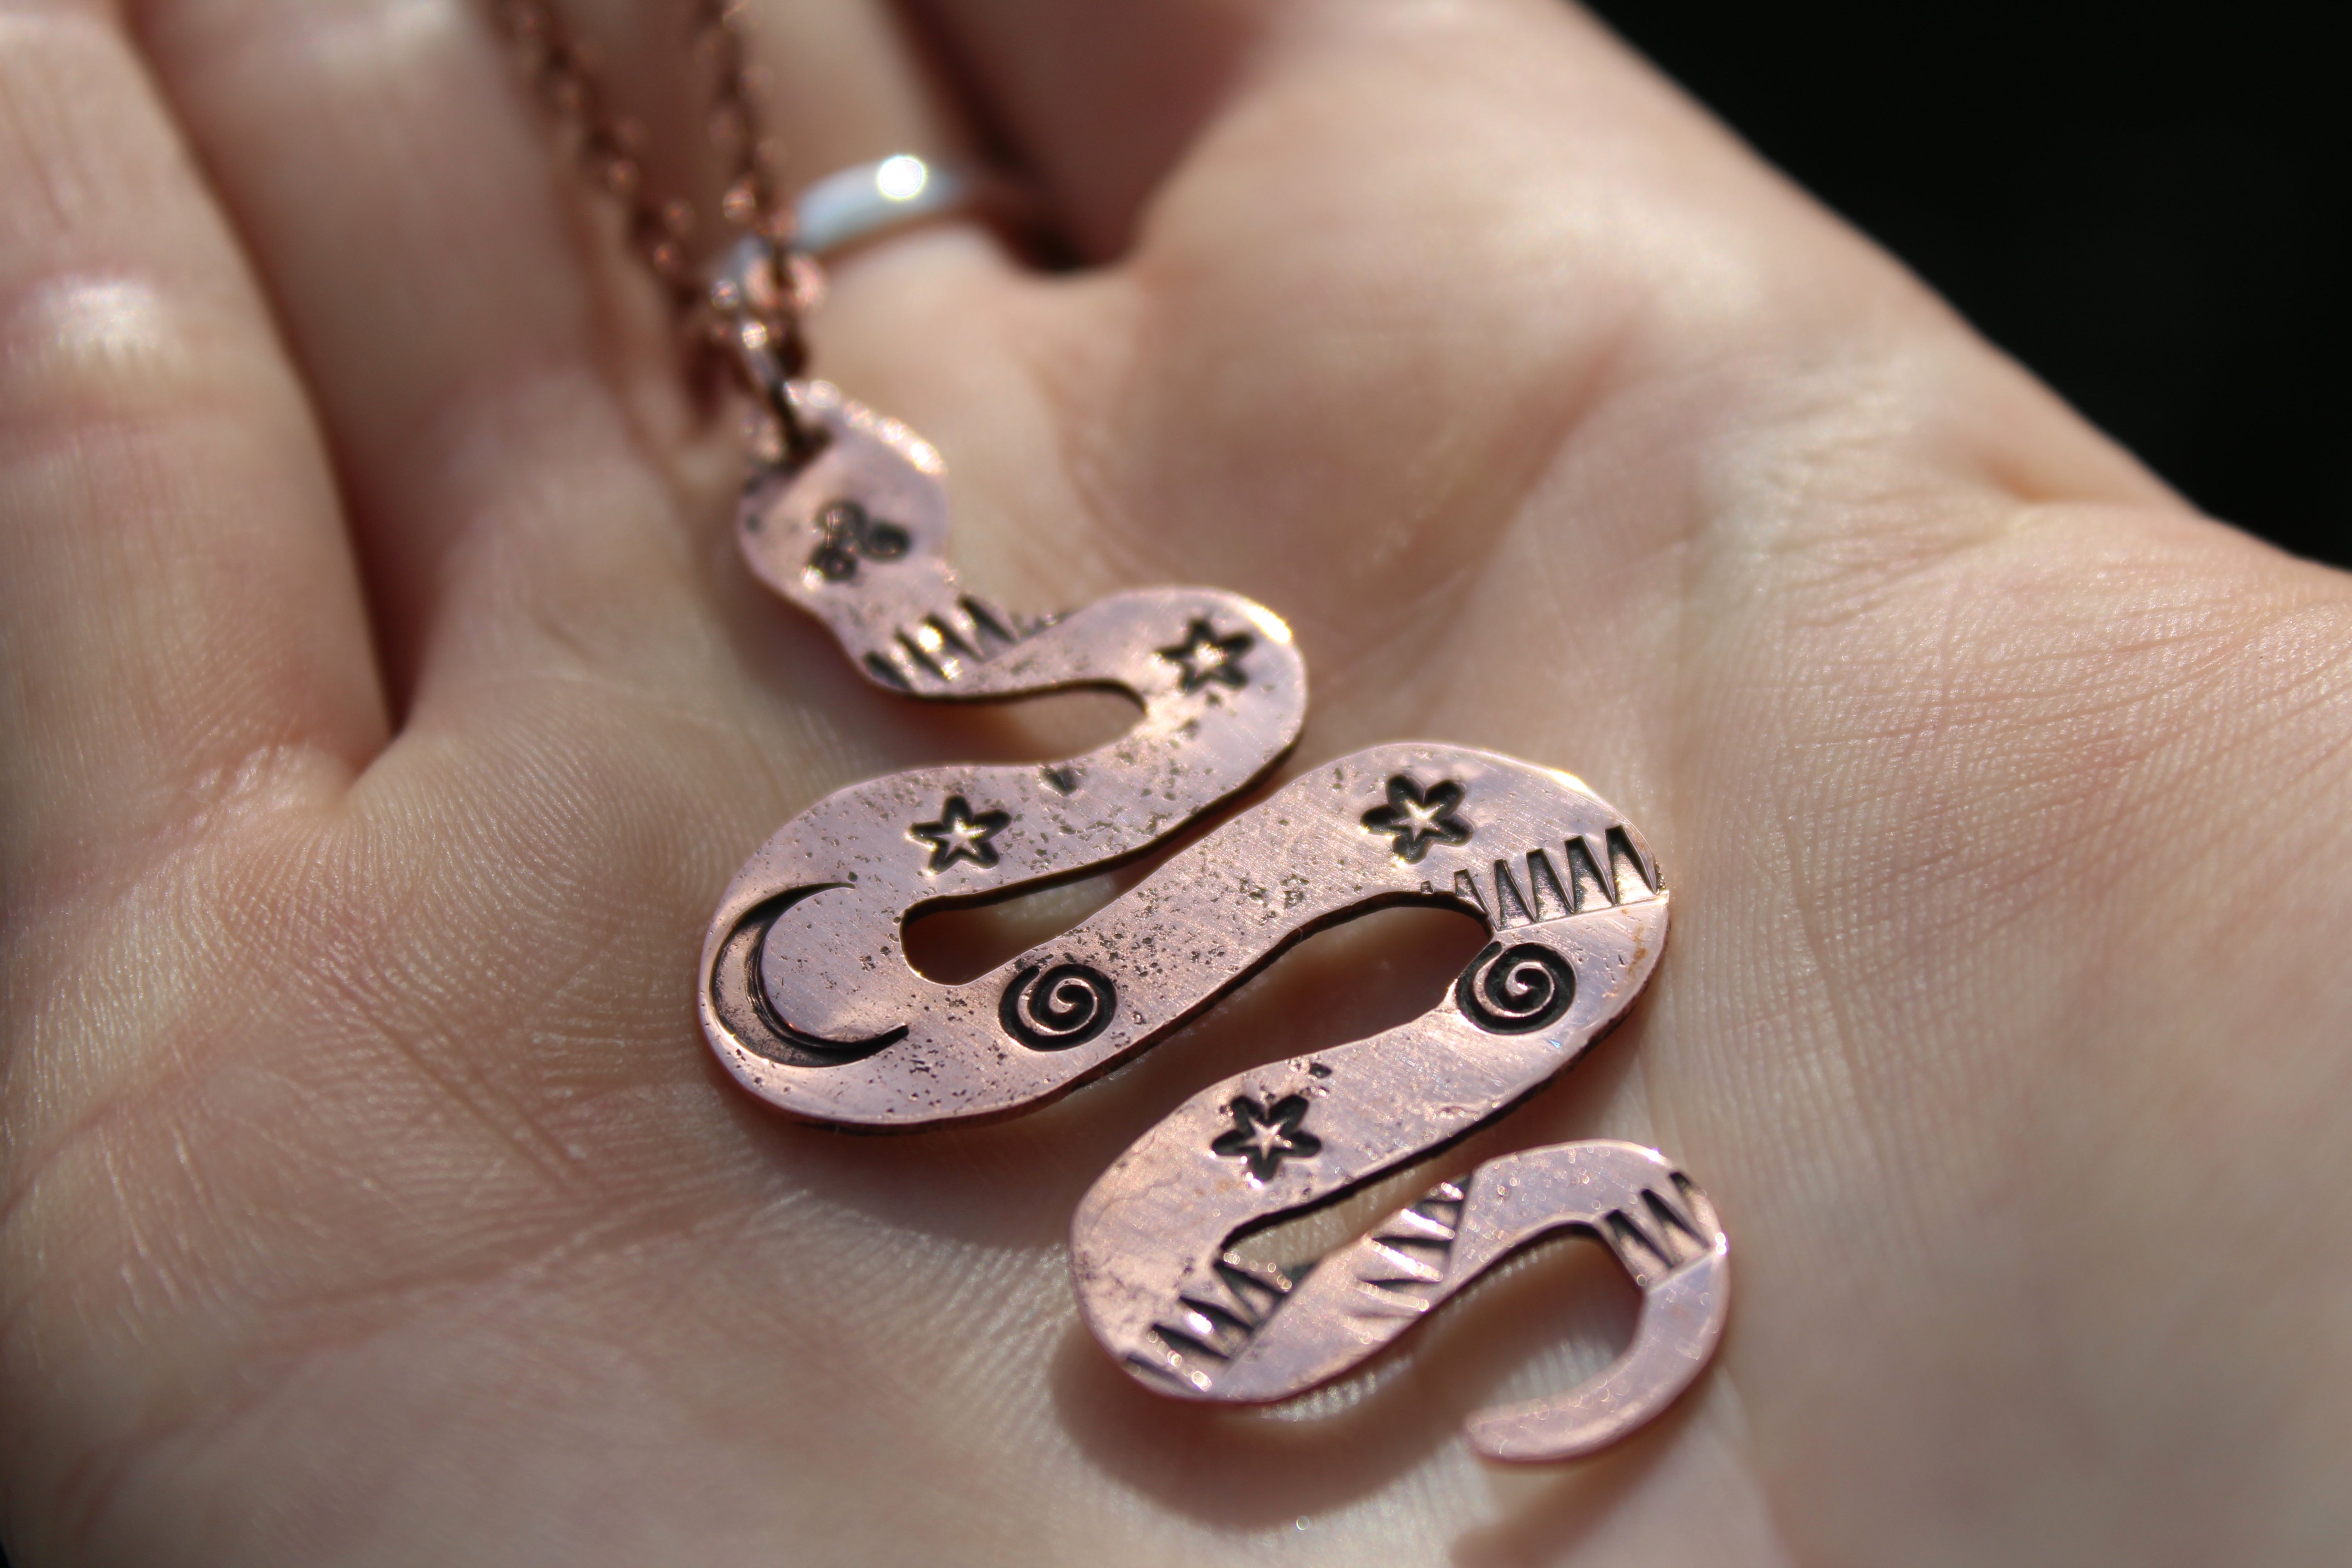 Botryoidal Chrysocolla Copper Snake Pendant Copper Necklace – CosmicDeva